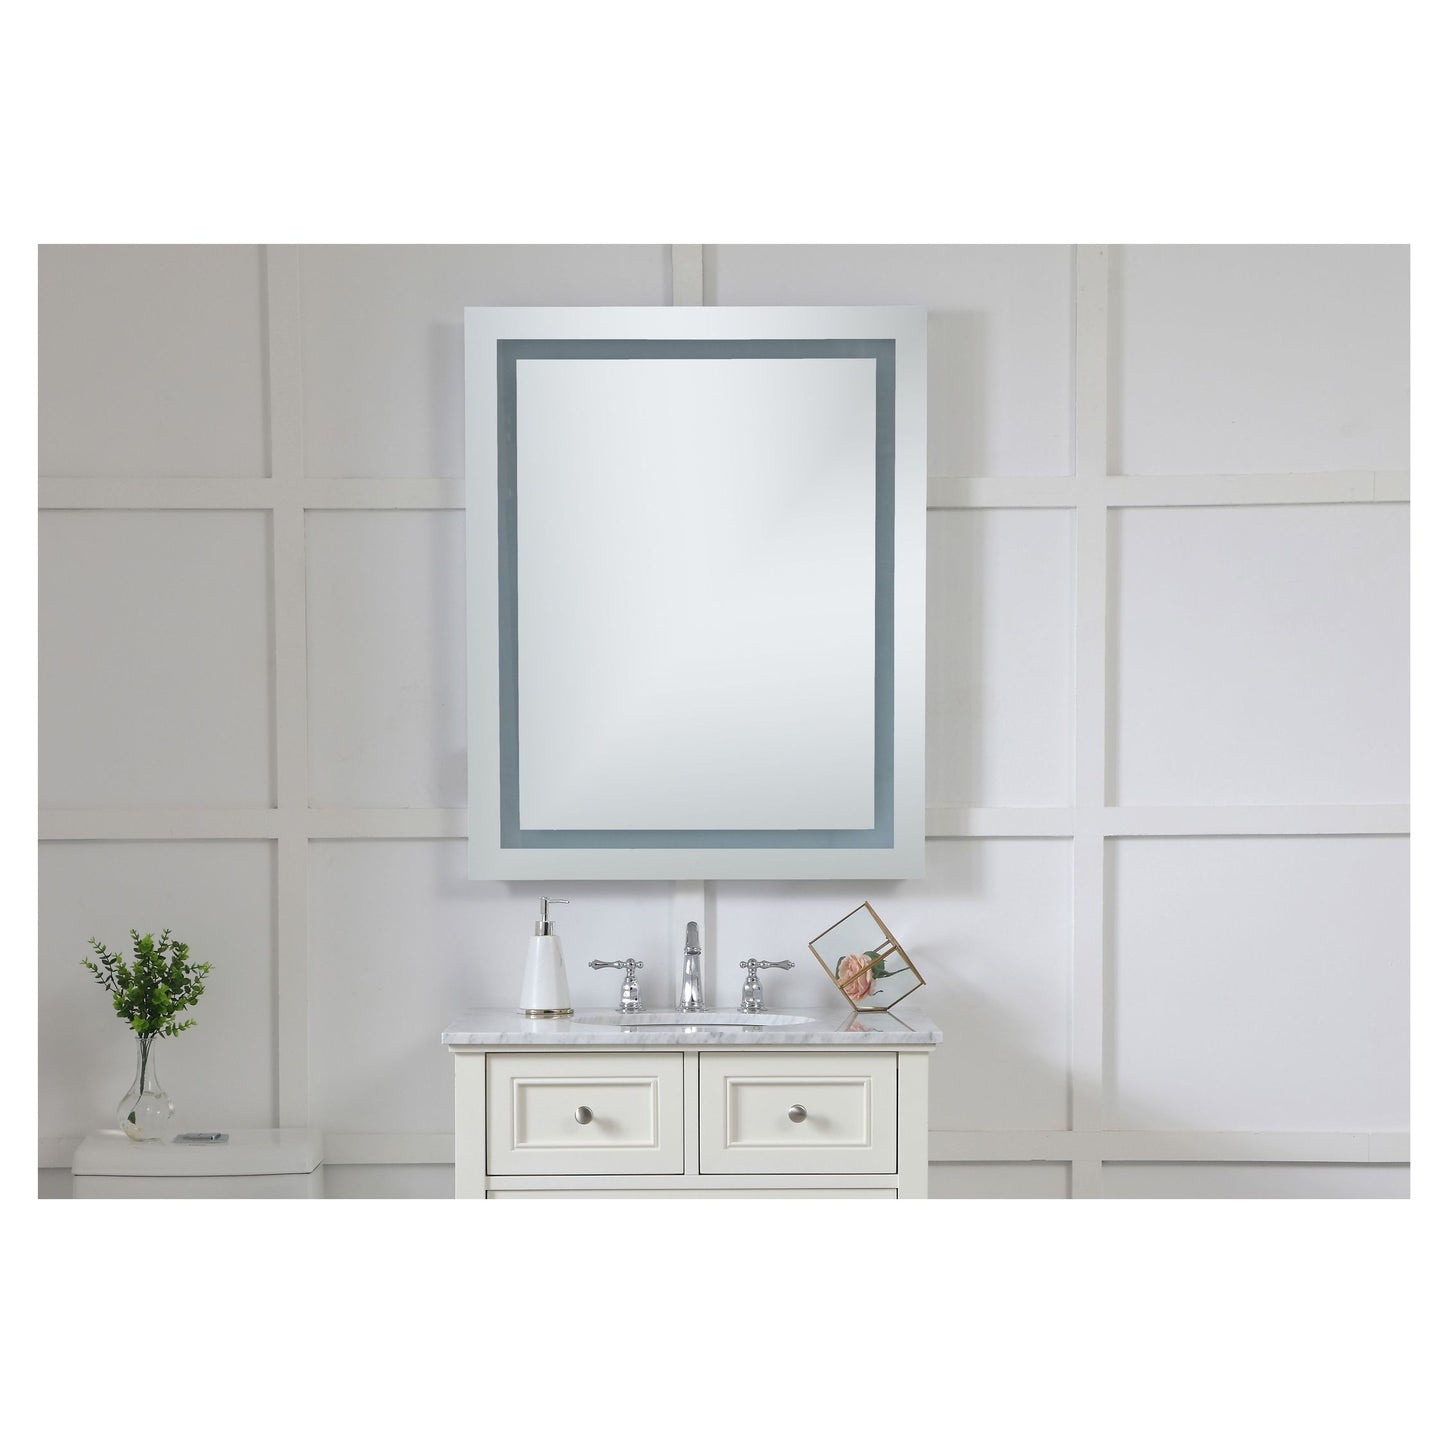 MRE-6031 Nova 32" x 40" LED Mirror in Glossy White